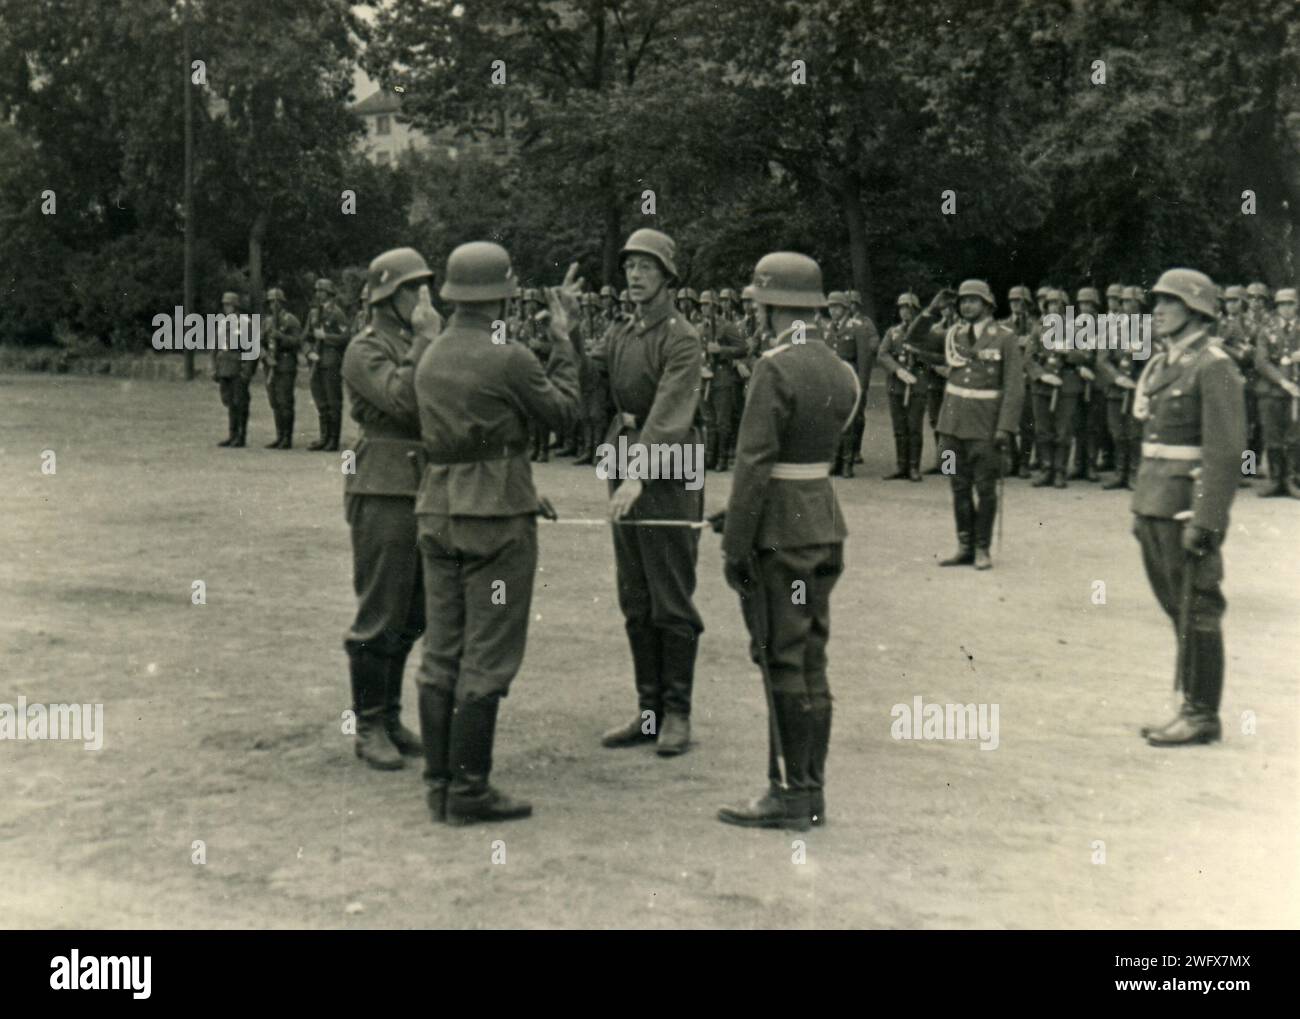 wwii - Seconde Guerre mondiale, soldats allemands, luftwaffe, Allemagne - 1938 Banque D'Images